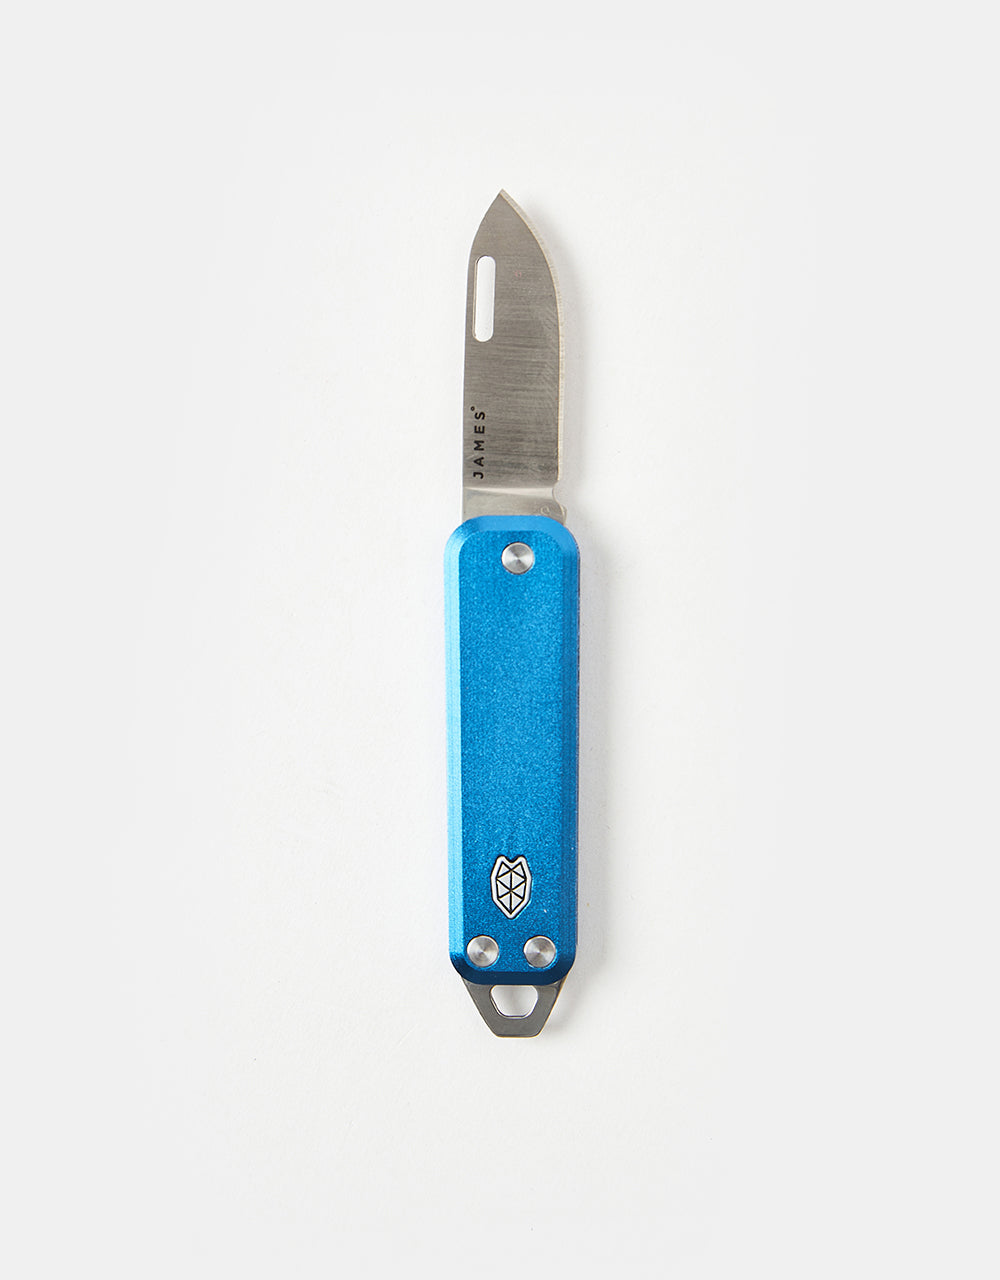 James The Elko Pocket Knife - Cerulean/Stainless/Aluminium